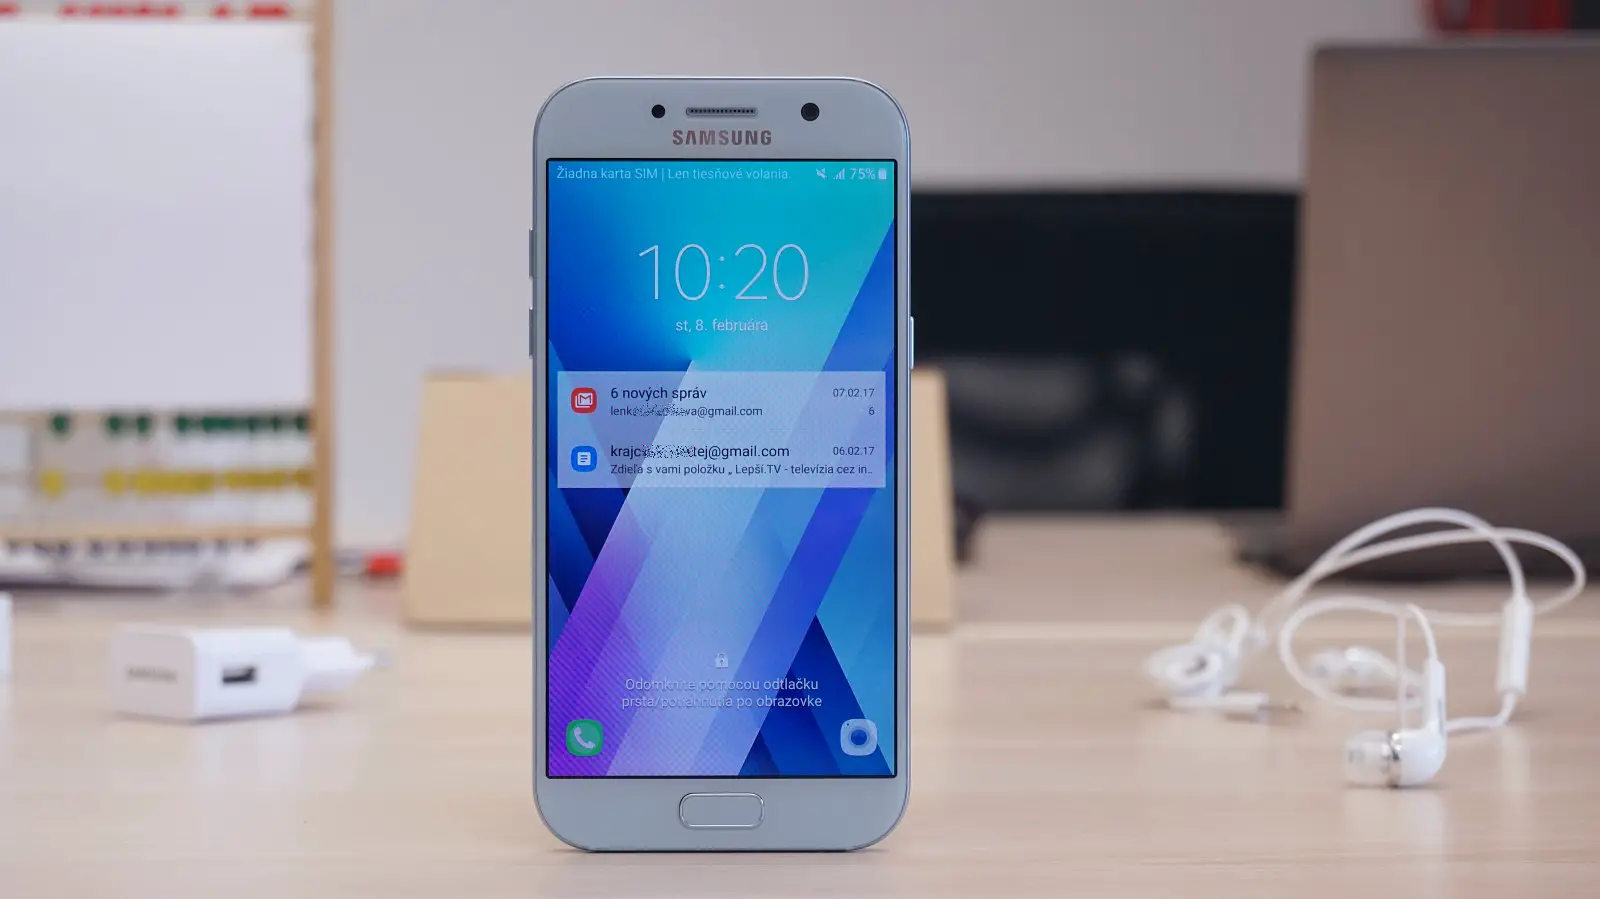 [Clone] Flash Stock Rom on Samsung Galaxy A5-vami